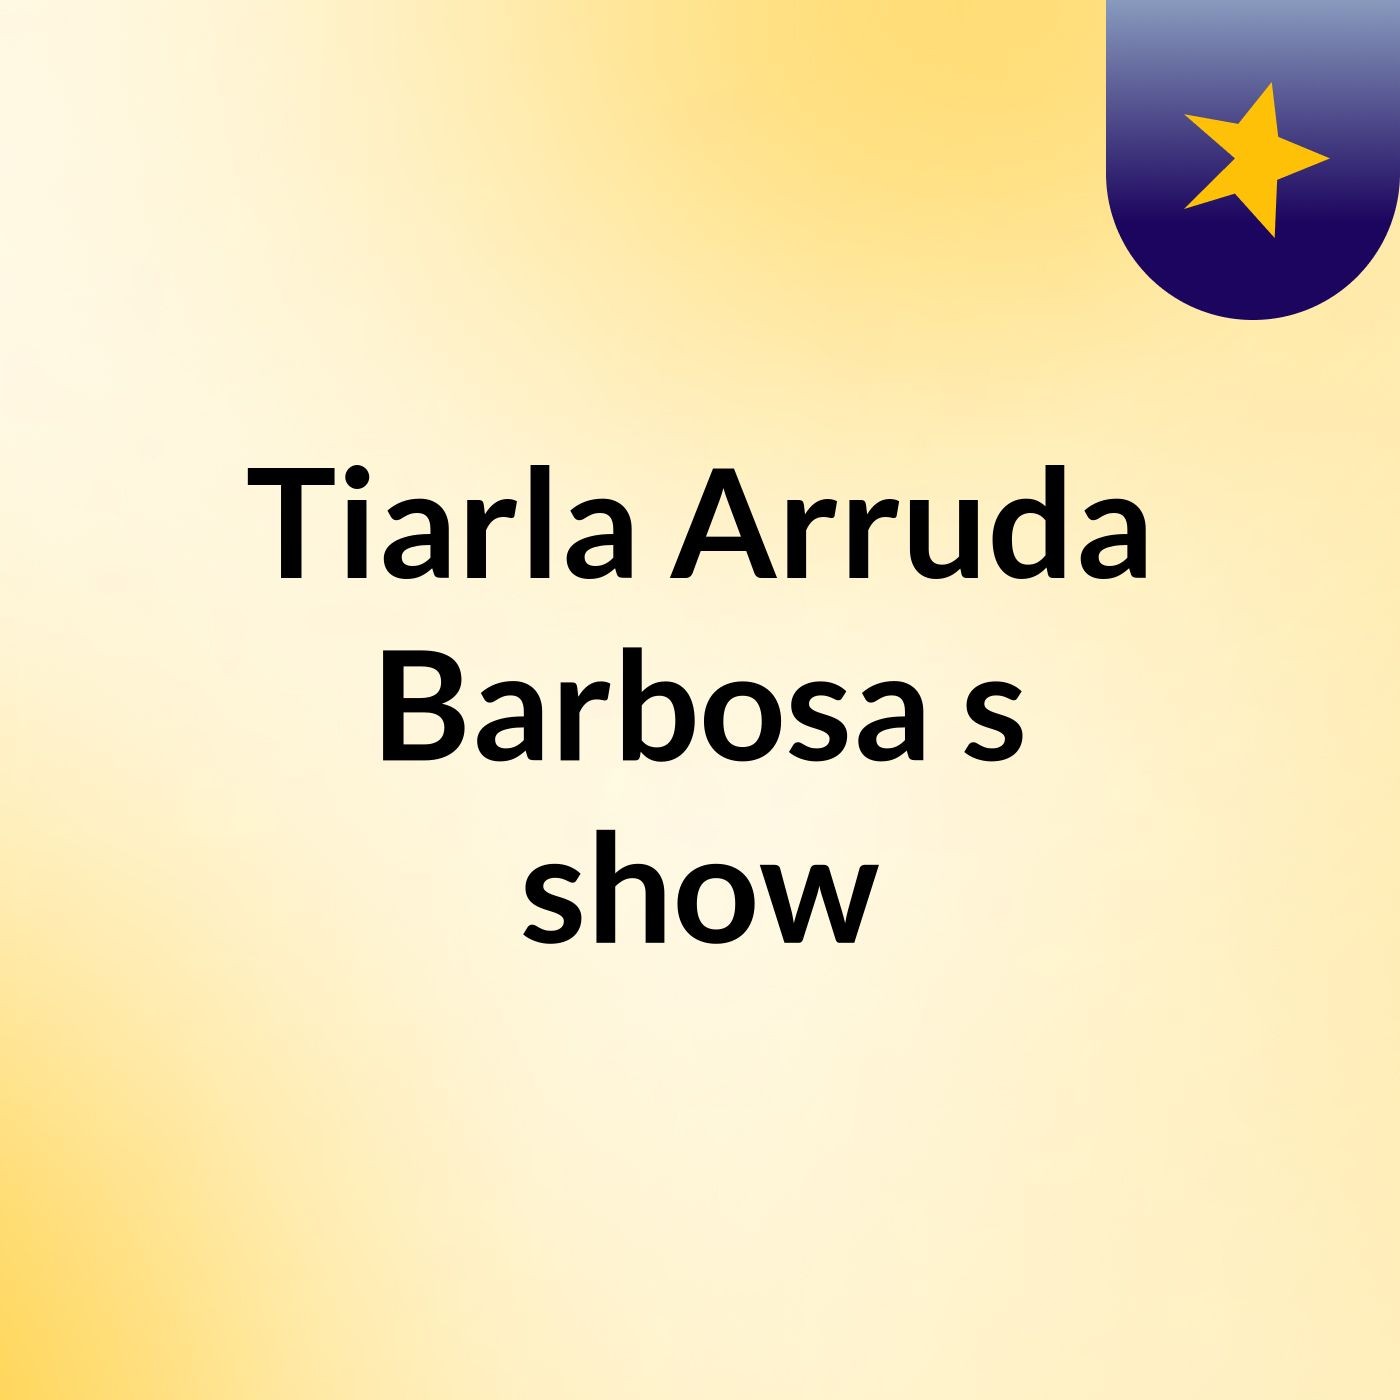 Tiarla Arruda Barbosa's show